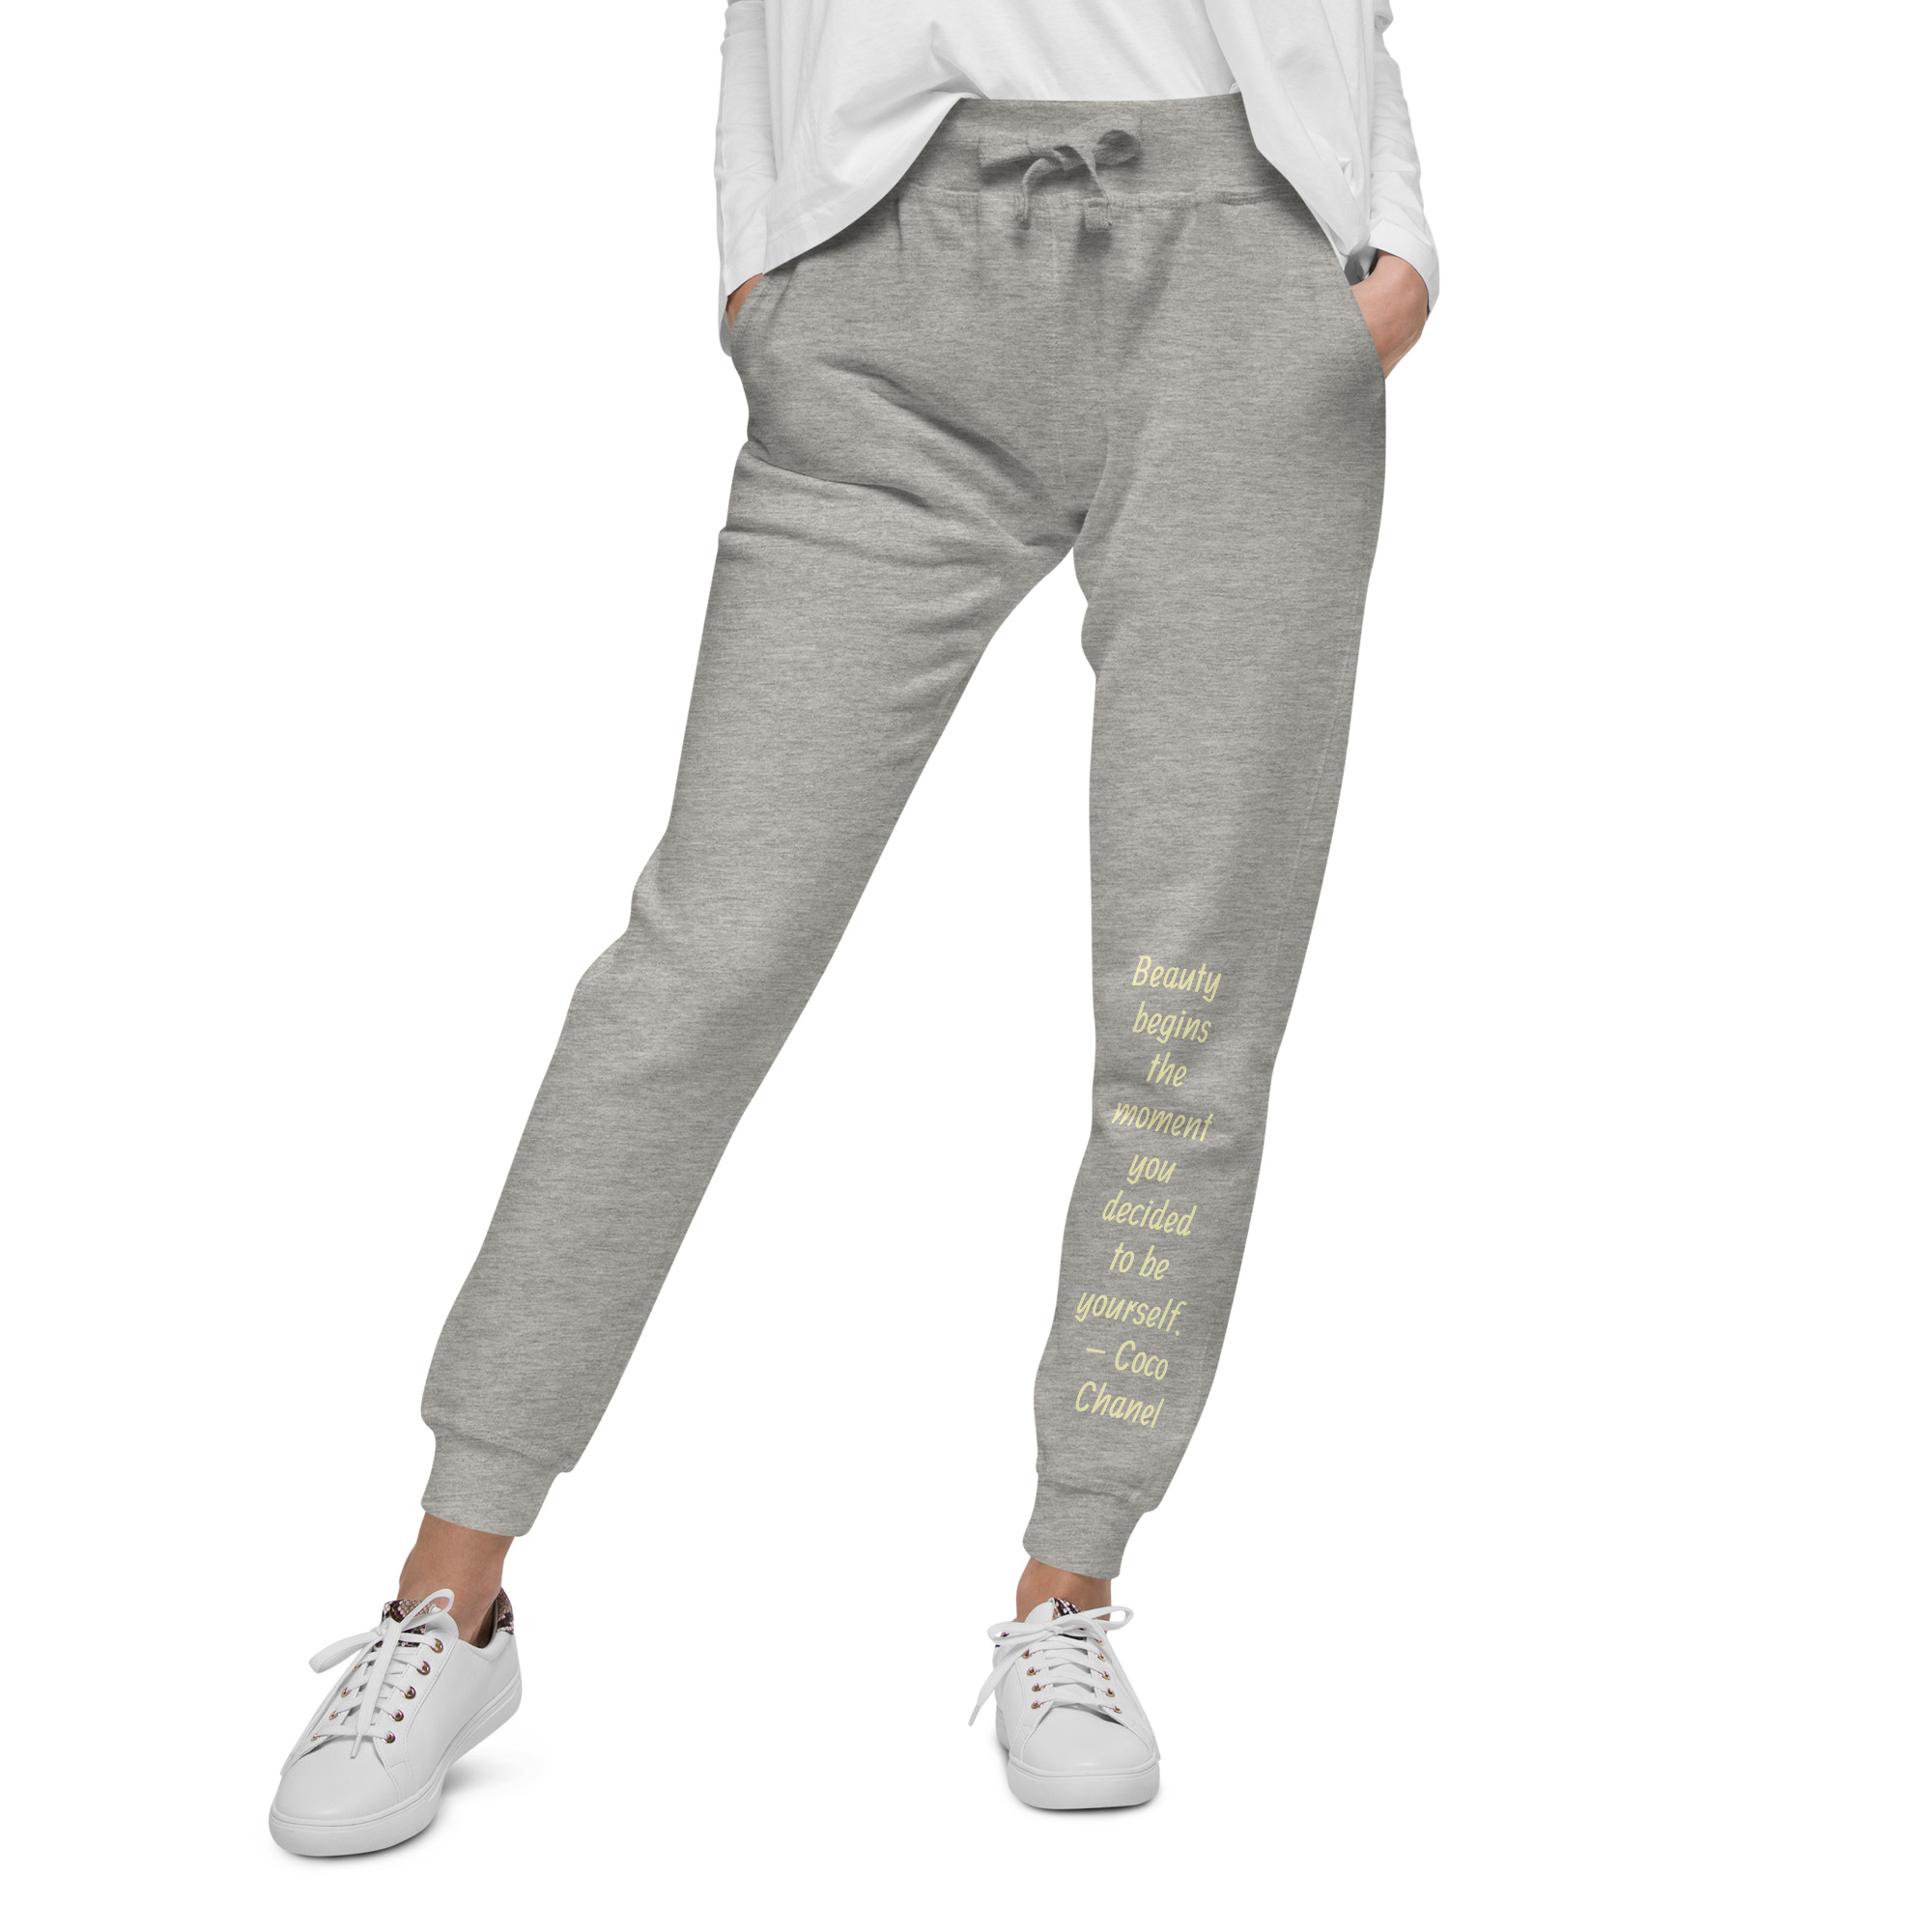 unisex-fleece-sweatpants-carbon-grey-front-654be944149d0-1.jpg